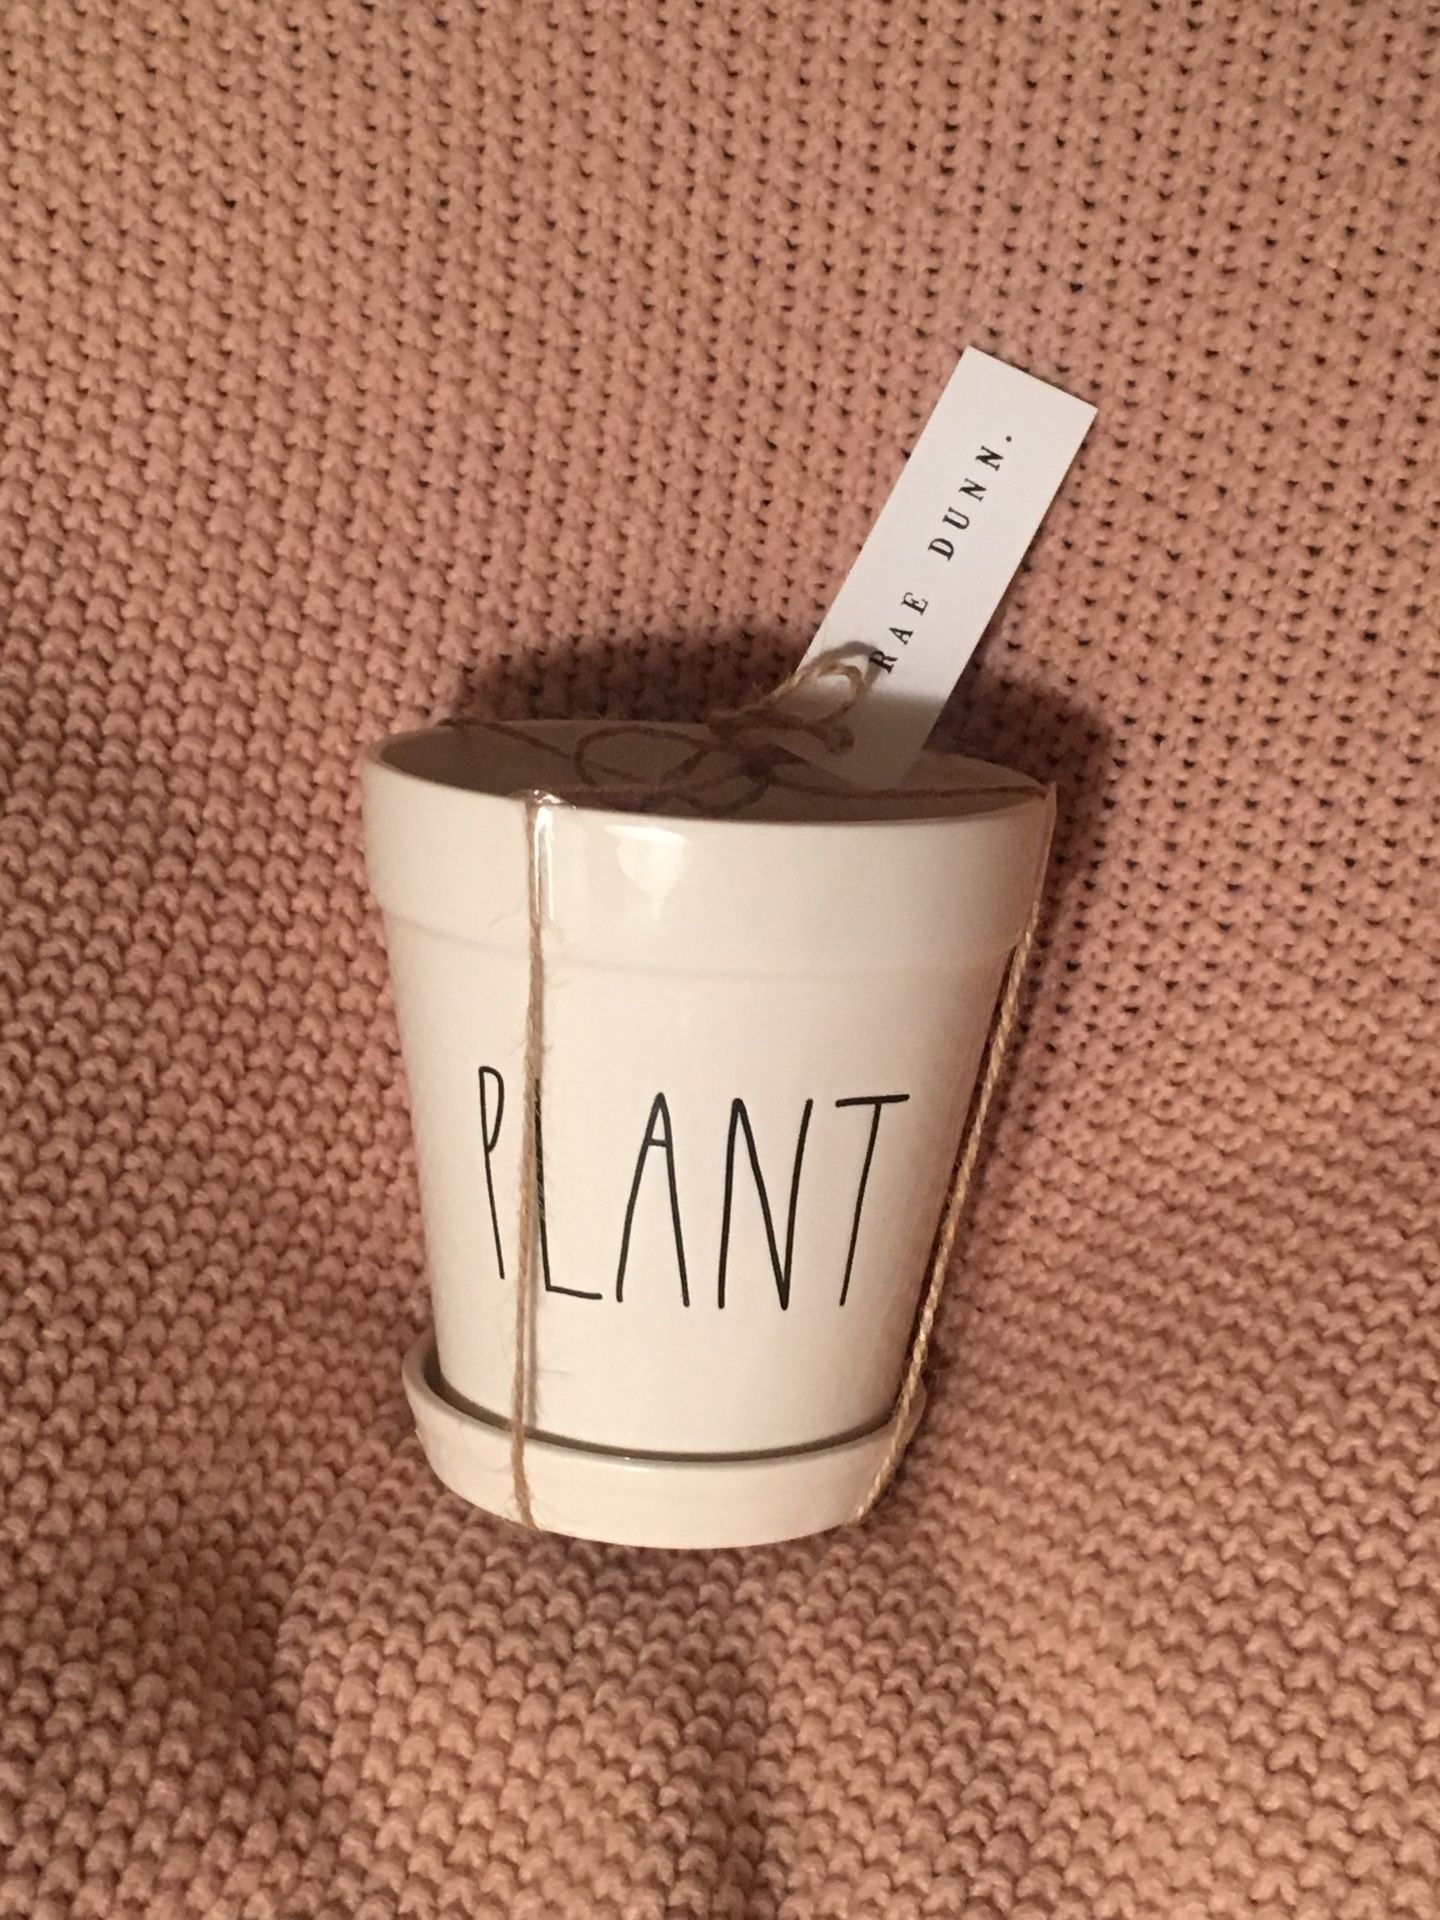 New Rae Dunn PLANT Flower Pot Planter size small